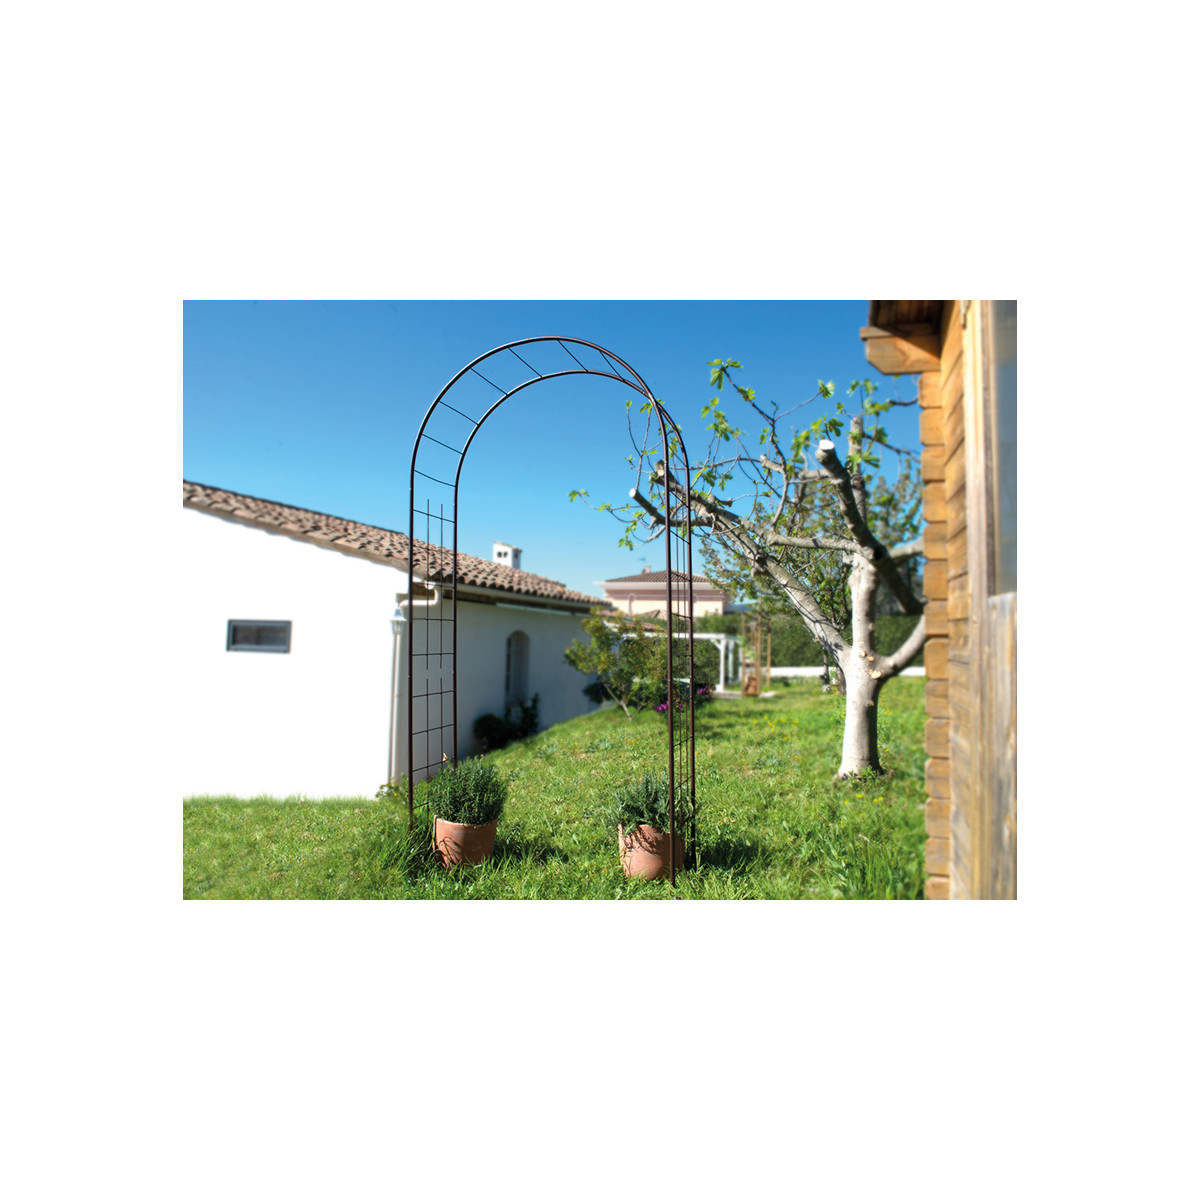 GYZD Fil de Fer de Jardin galvanisé 3 Mètres Suspension Tableau Jardinage Clôture de Fil Fer Métallique Enduit pour Clôture de Jardin Jardinage 